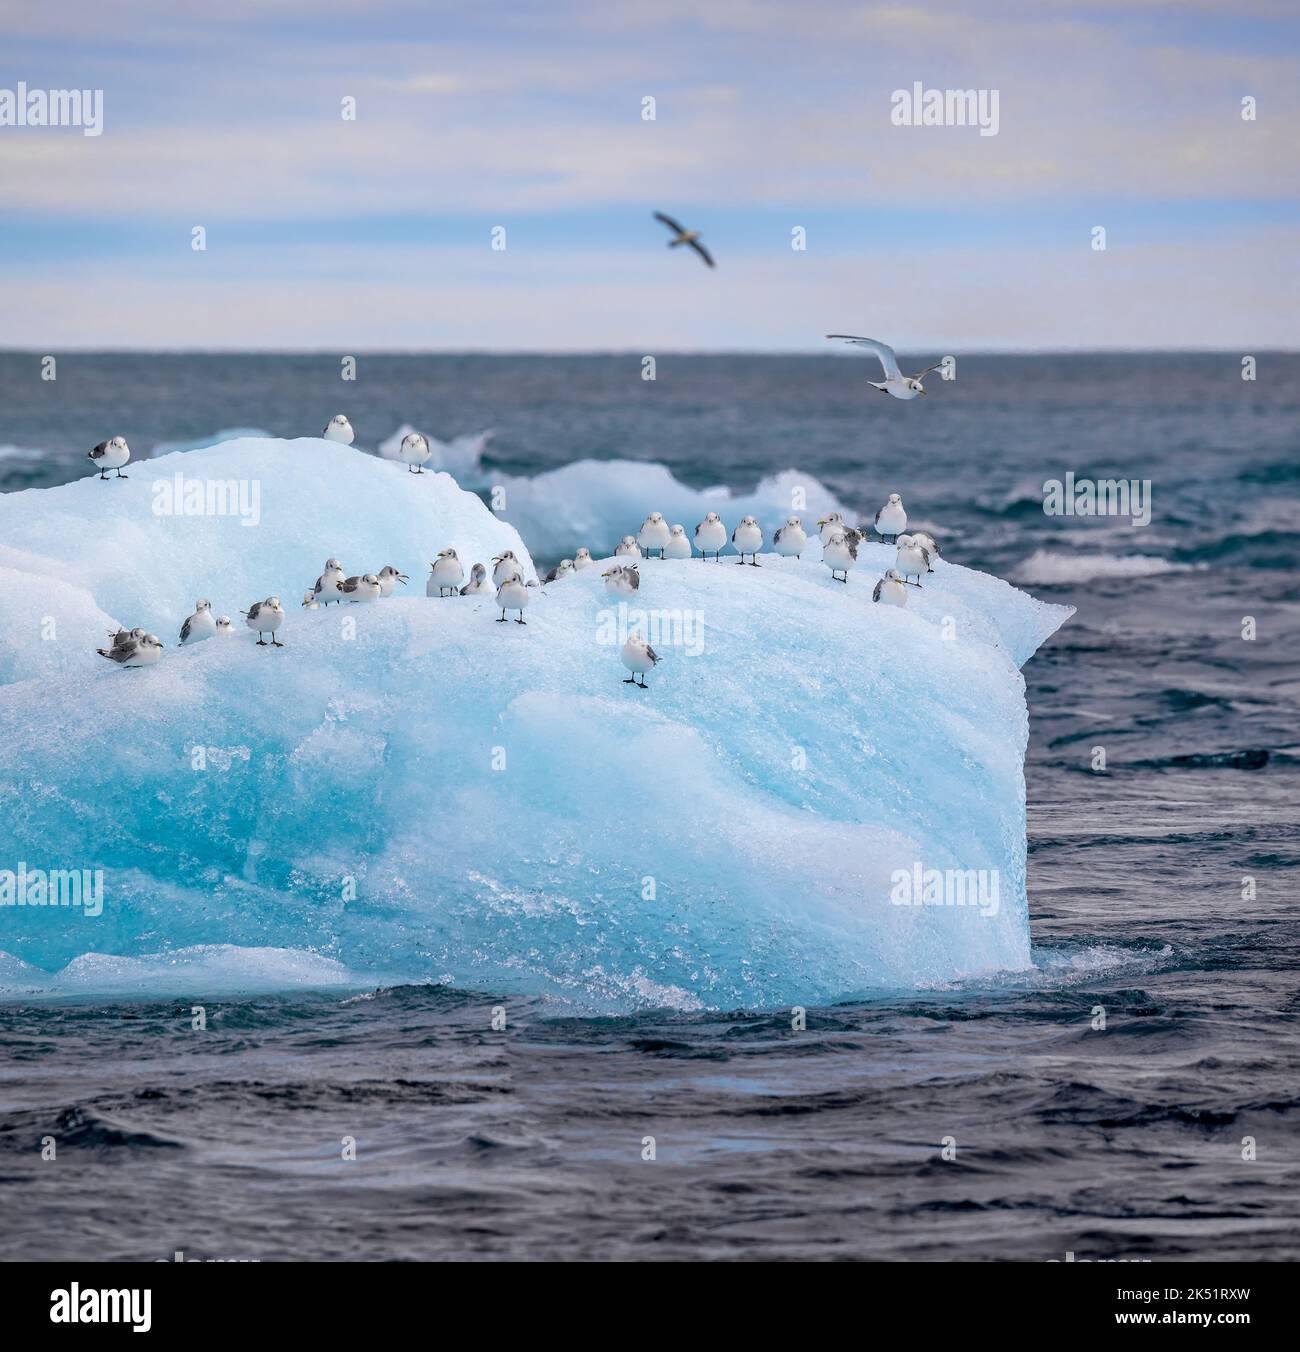 Dérive de l'iceberg avec des goélands de mer près du glacier lagon Jökulsarlon - islande Banque D'Images